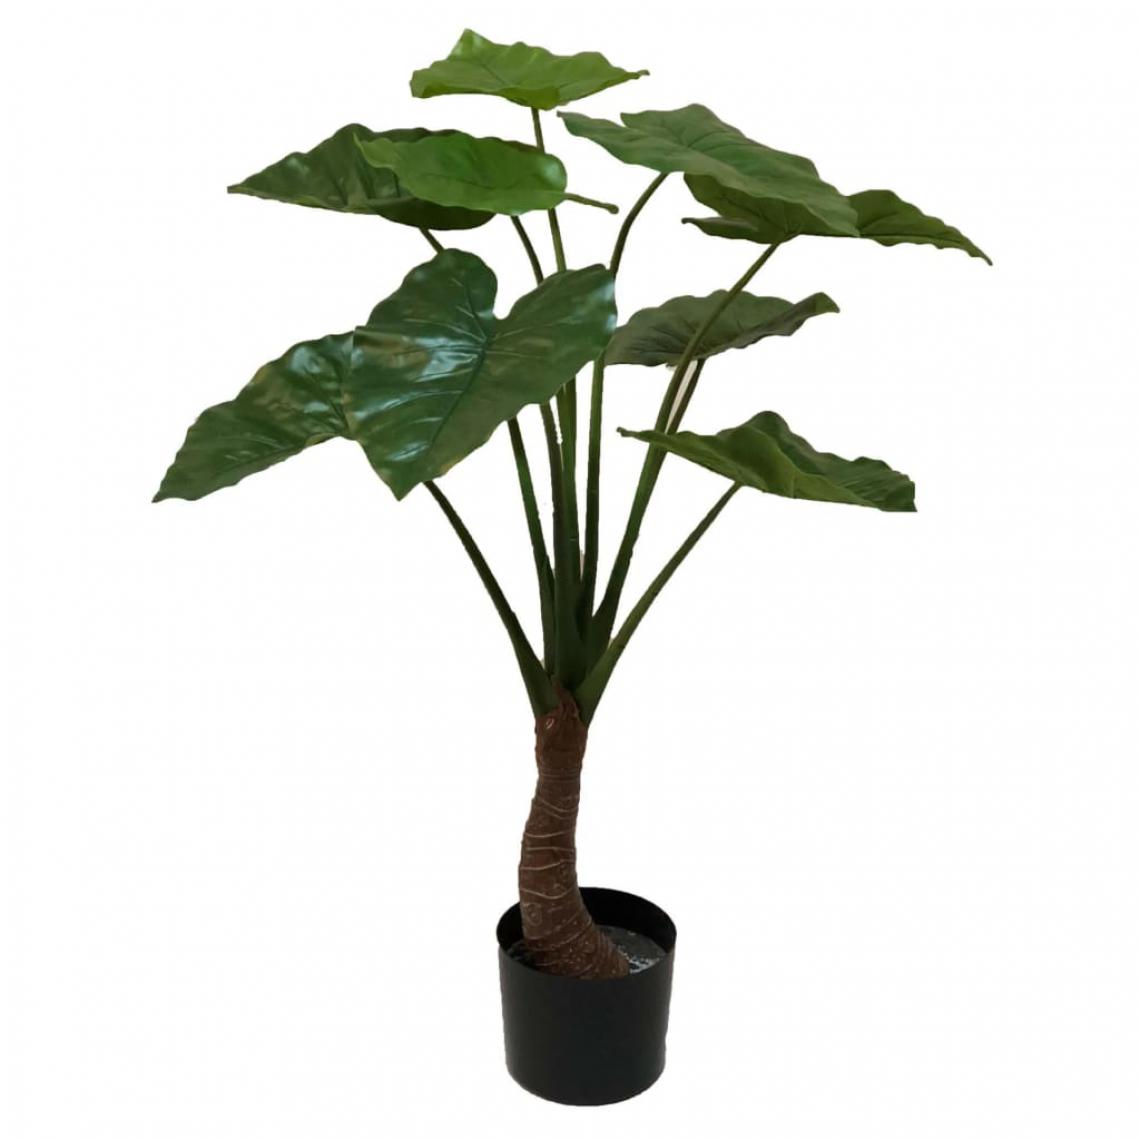 Emerald - Emerald Alocasia artificiel en pot 90 cm - Plantes et fleurs artificielles